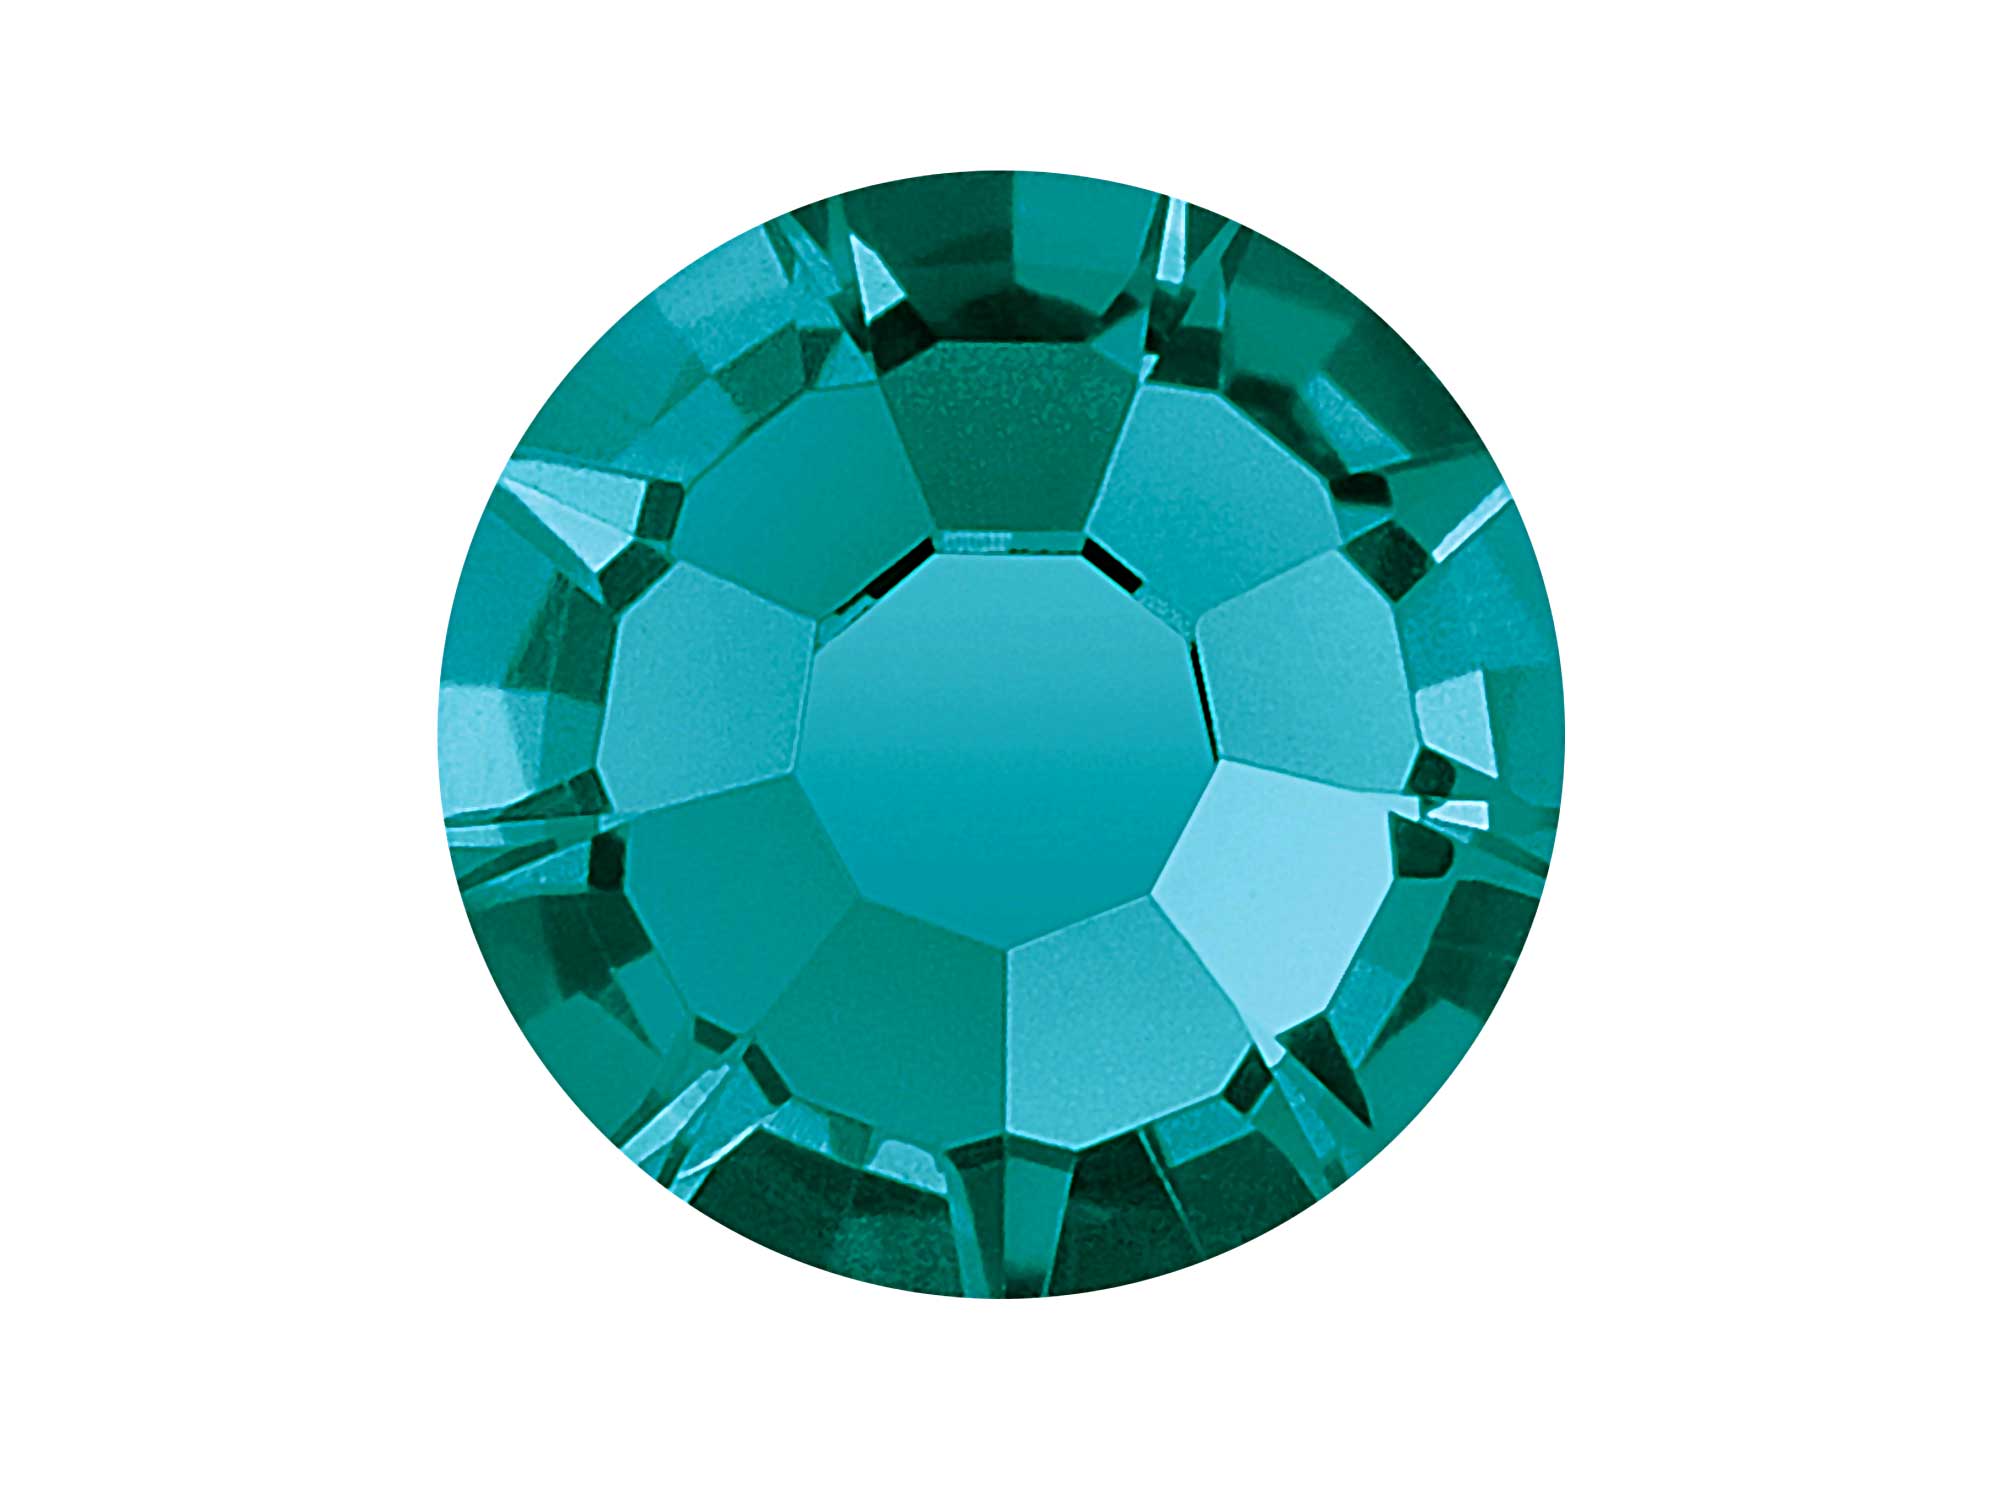 Cobalt Blue Preciosa VIVA or MAXIMA Chaton Roses Rhinestone Flatbacks -  Crystals and Beads for Friends